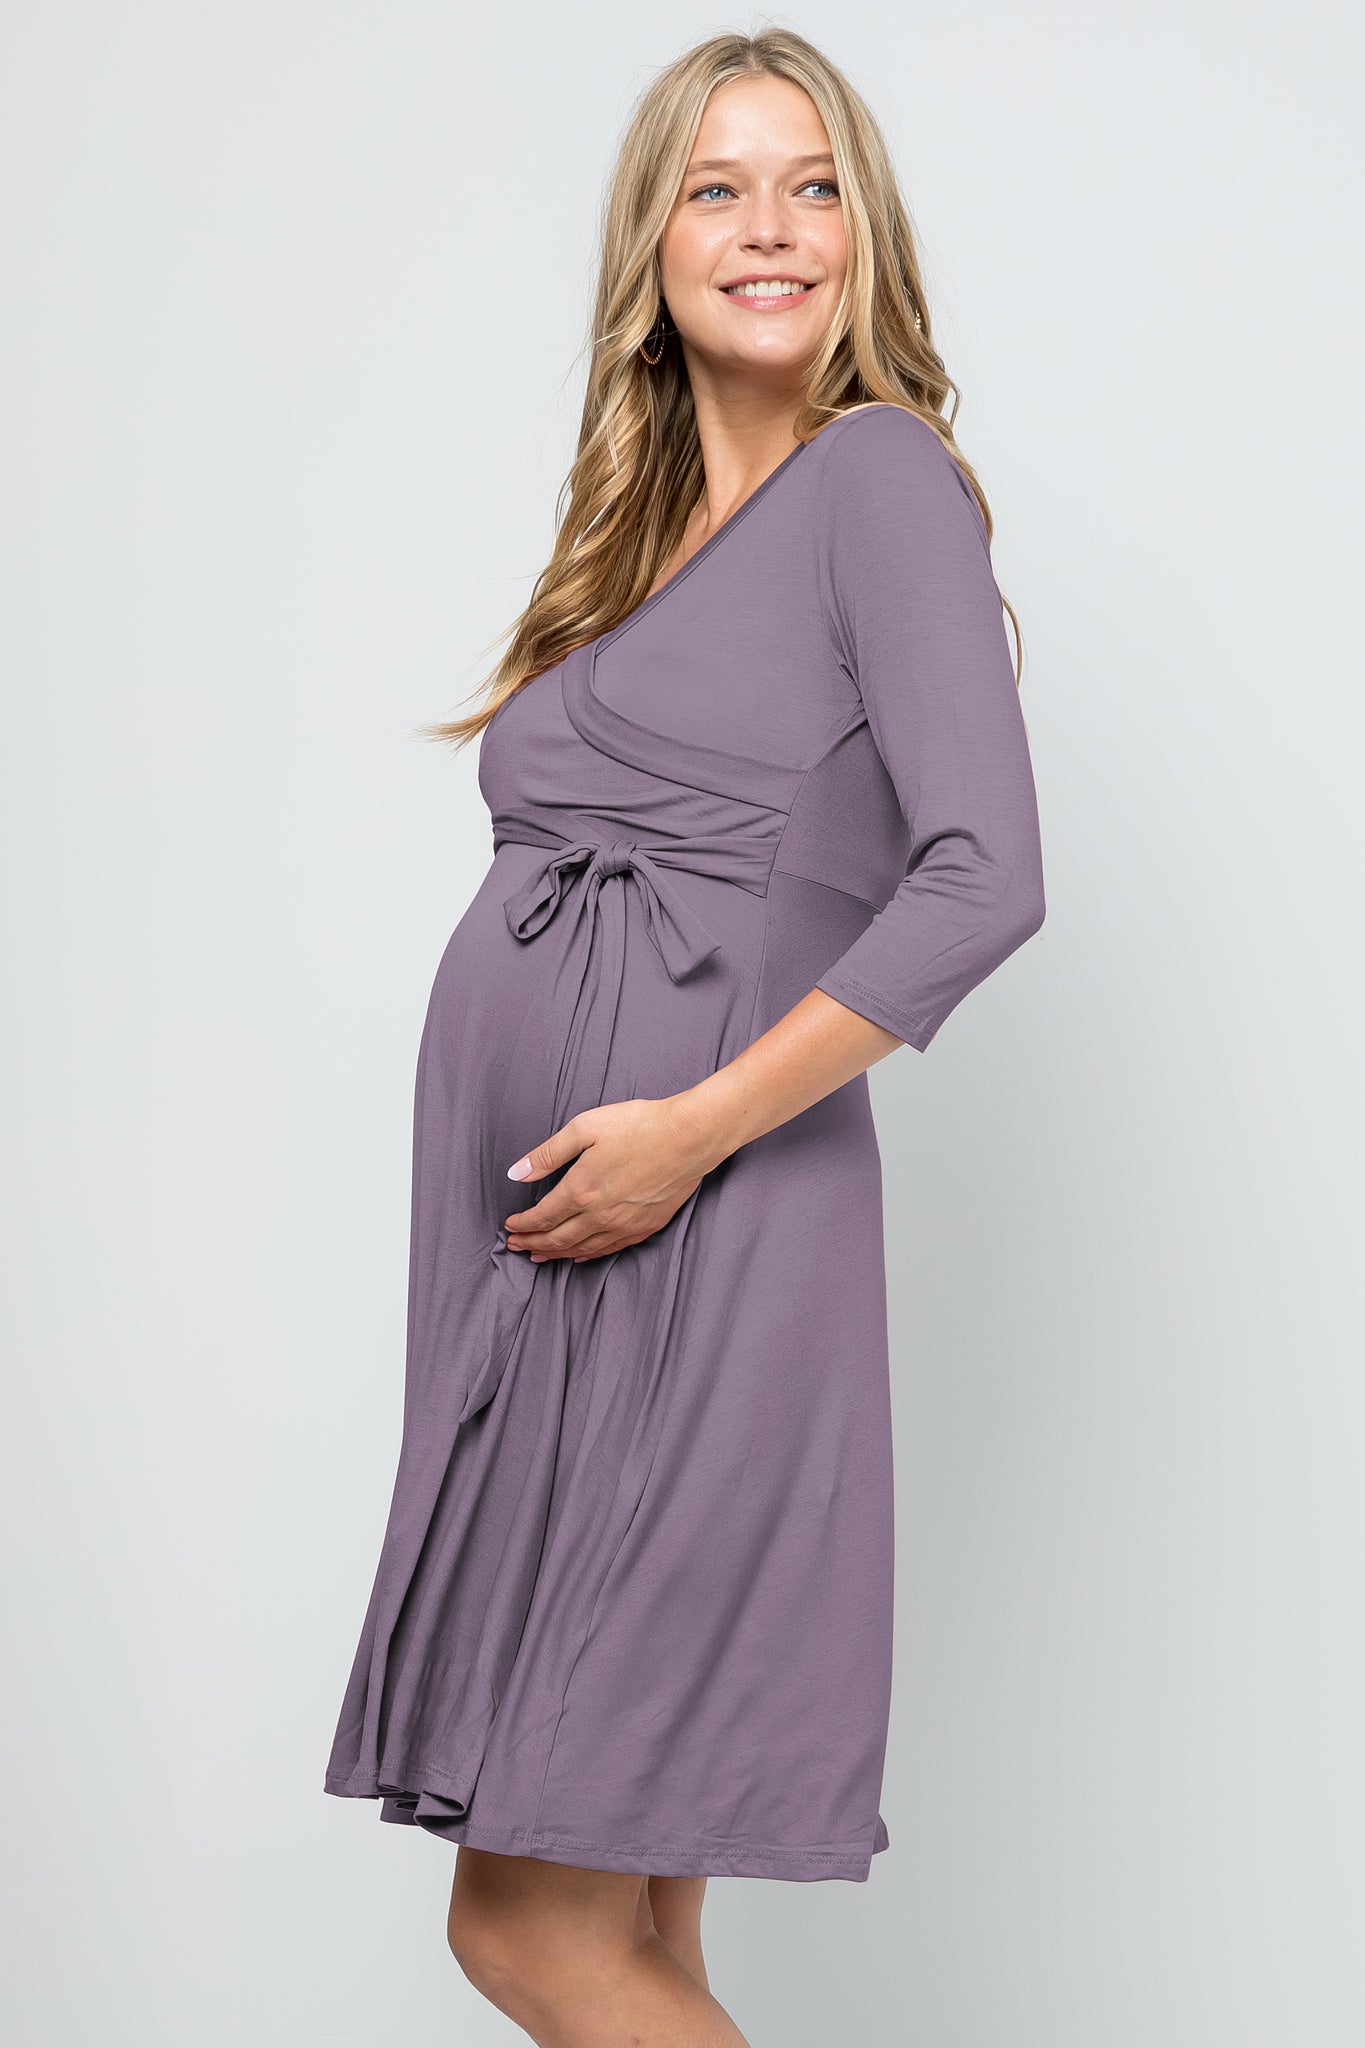 maternity pregnancy baby shower fit flare quarter sleeve surplice spring summer cocktail dress